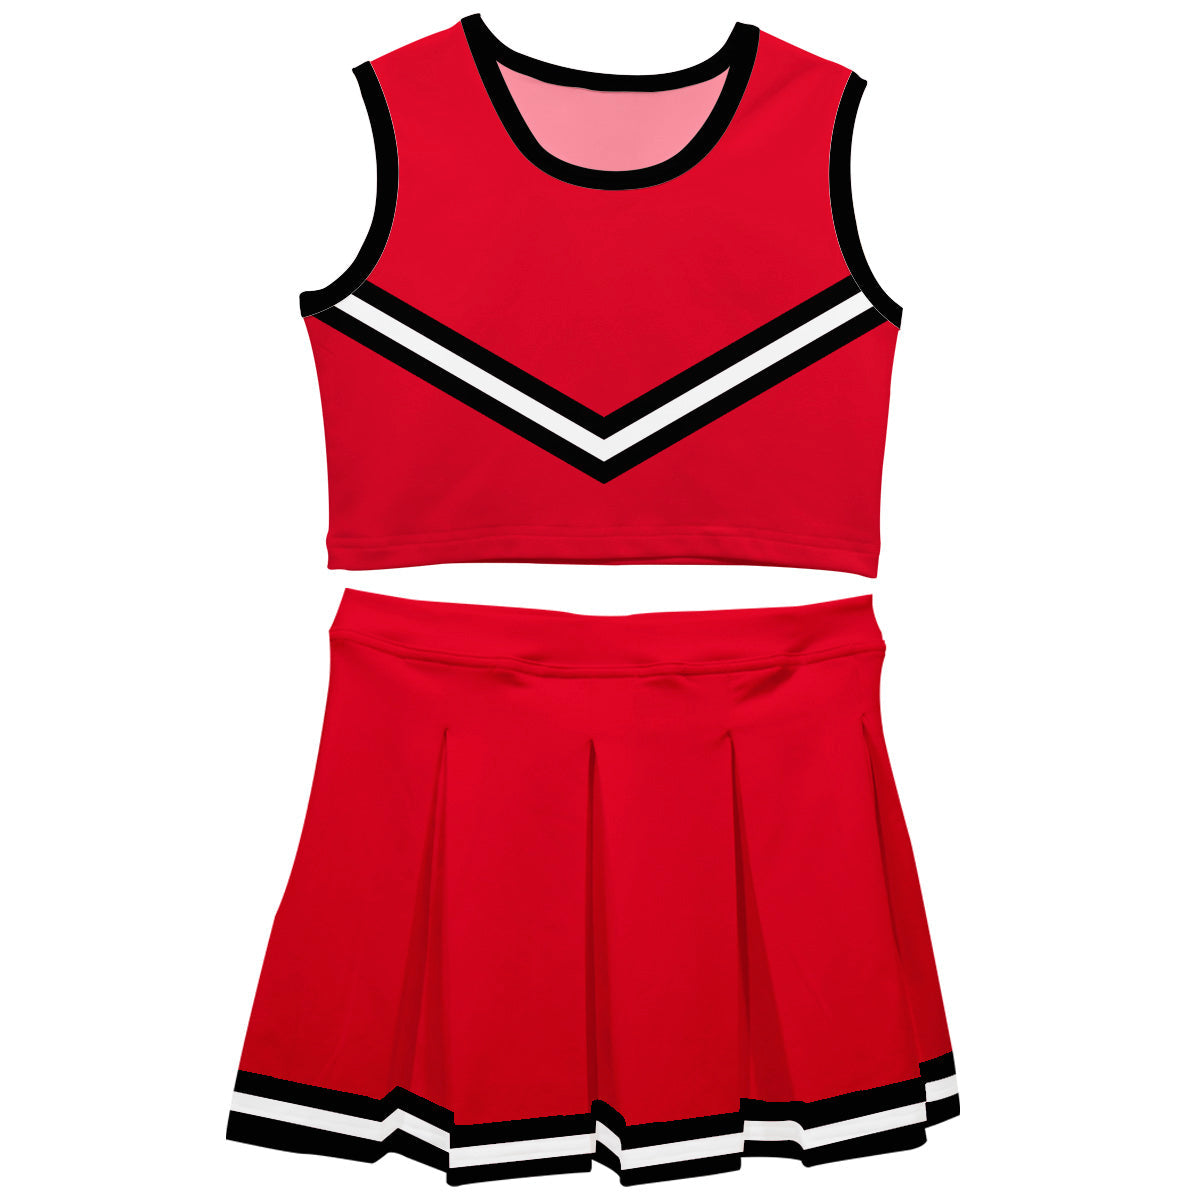 Red and Black Sleeveless Cheerleader Set